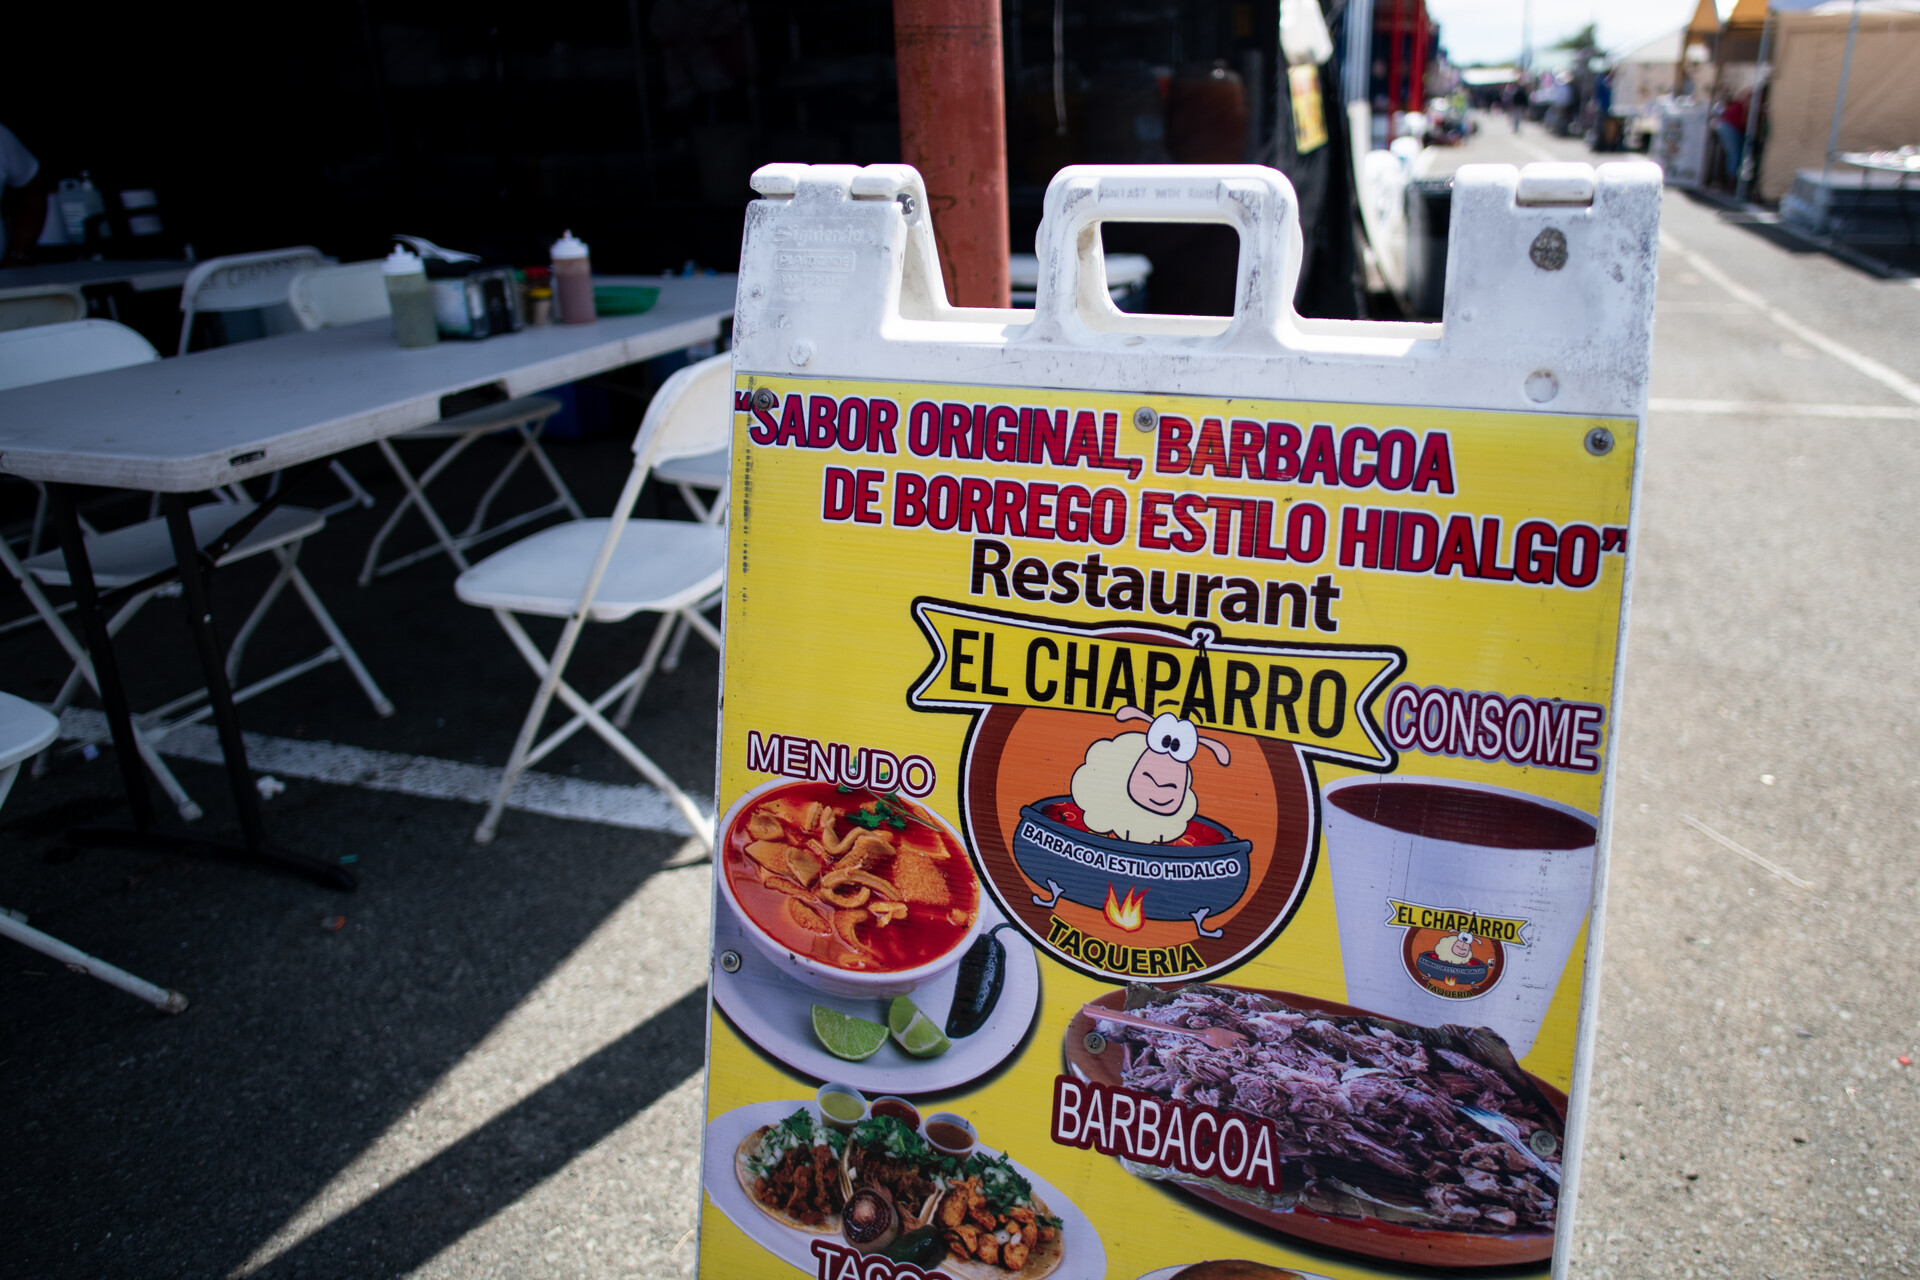 A signboard for El Chaparro, a barbacoa stand in the flea market.